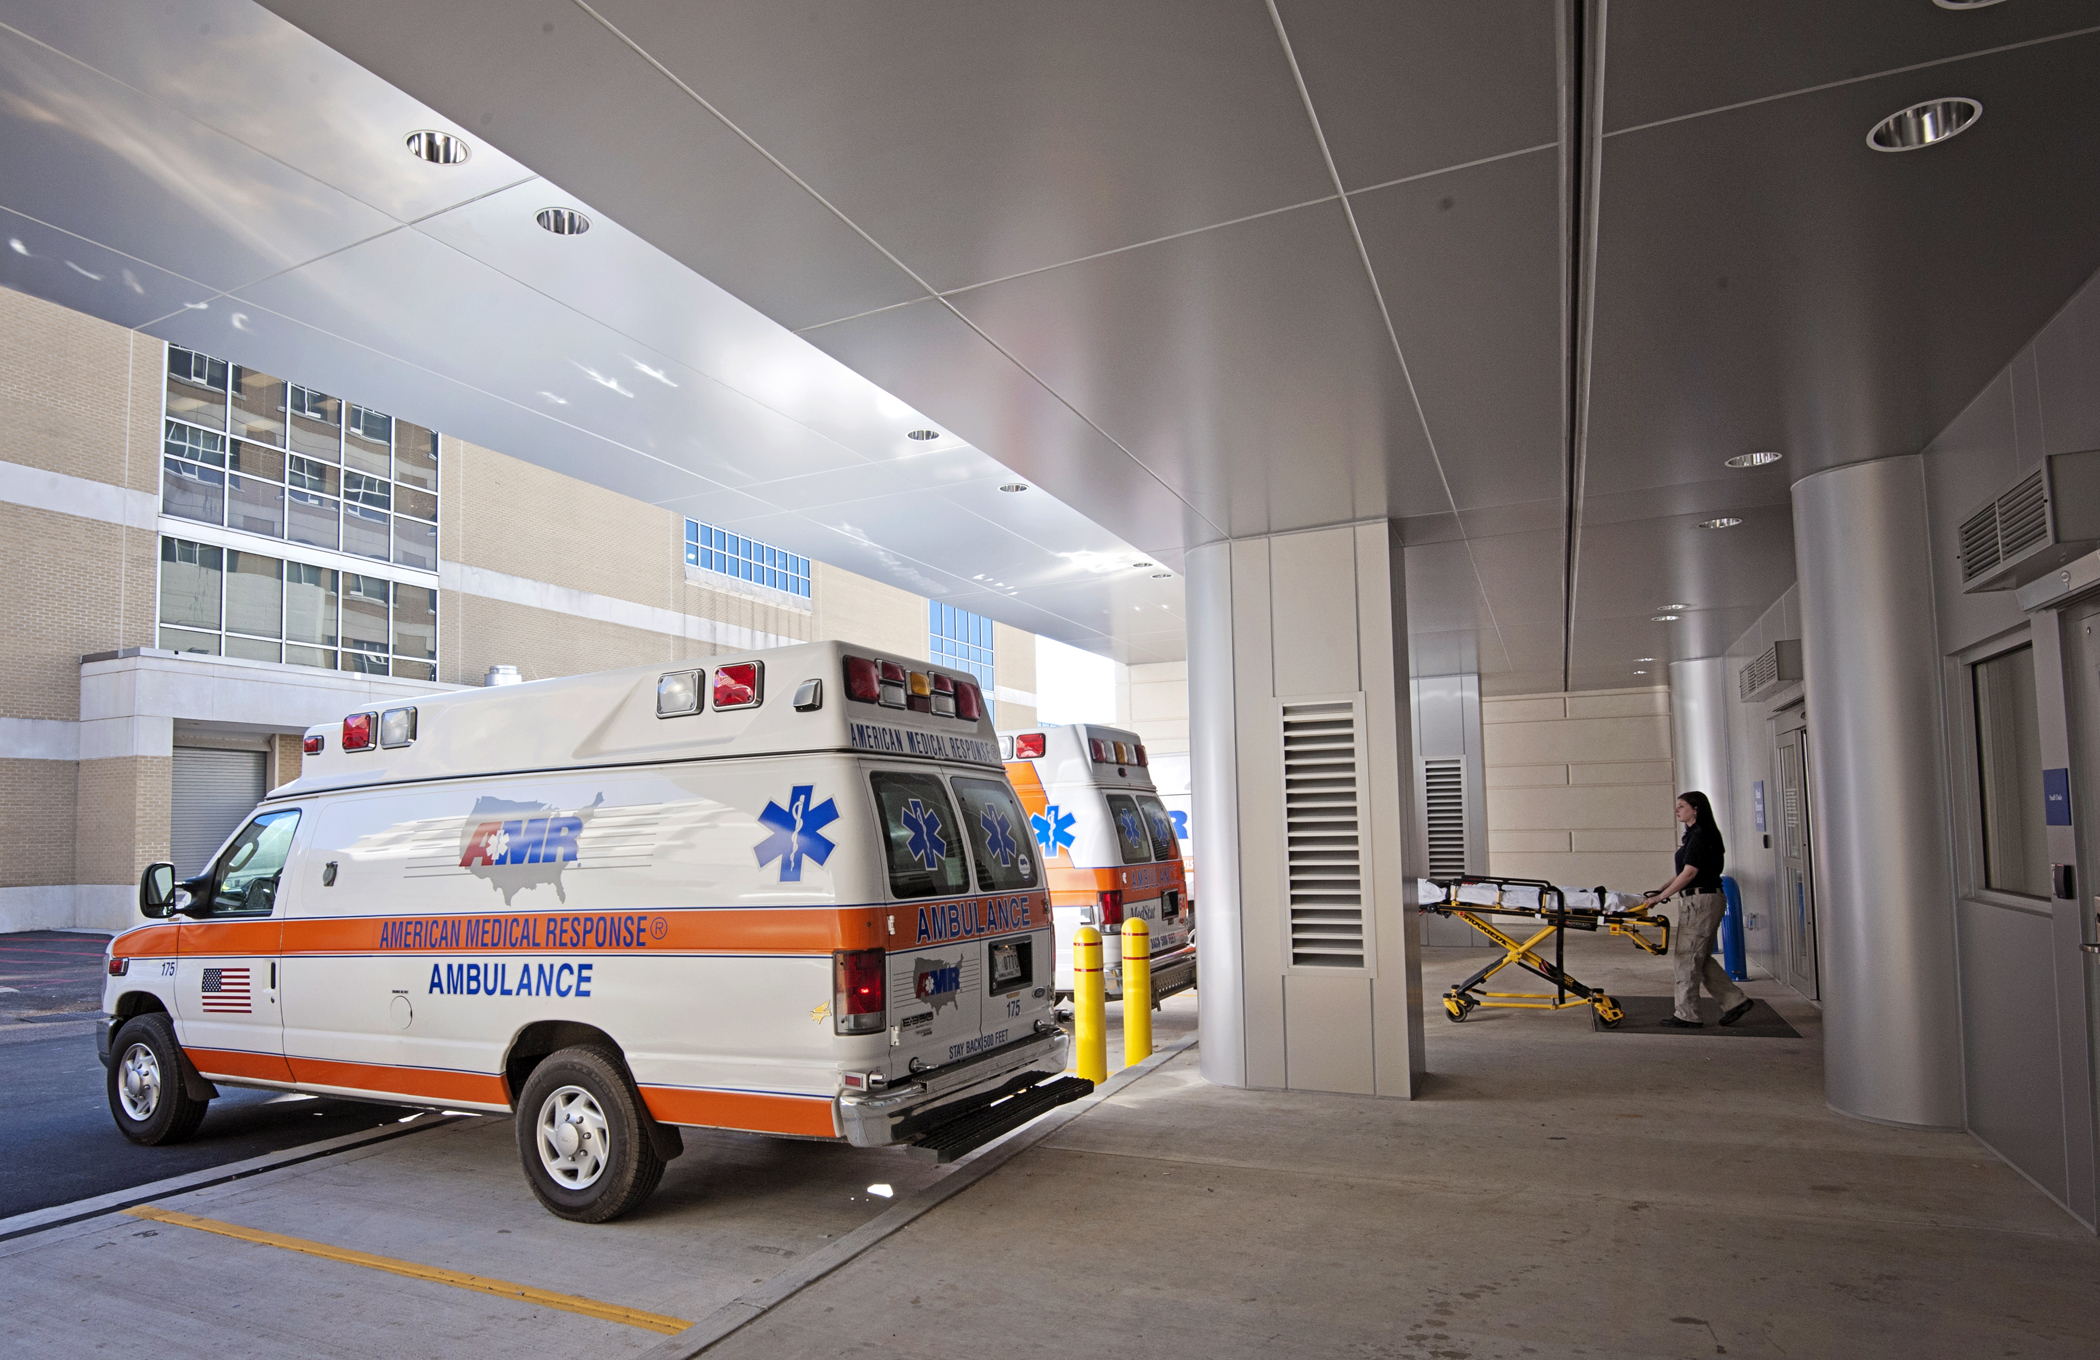 American Medical Response (AMR) ambulances